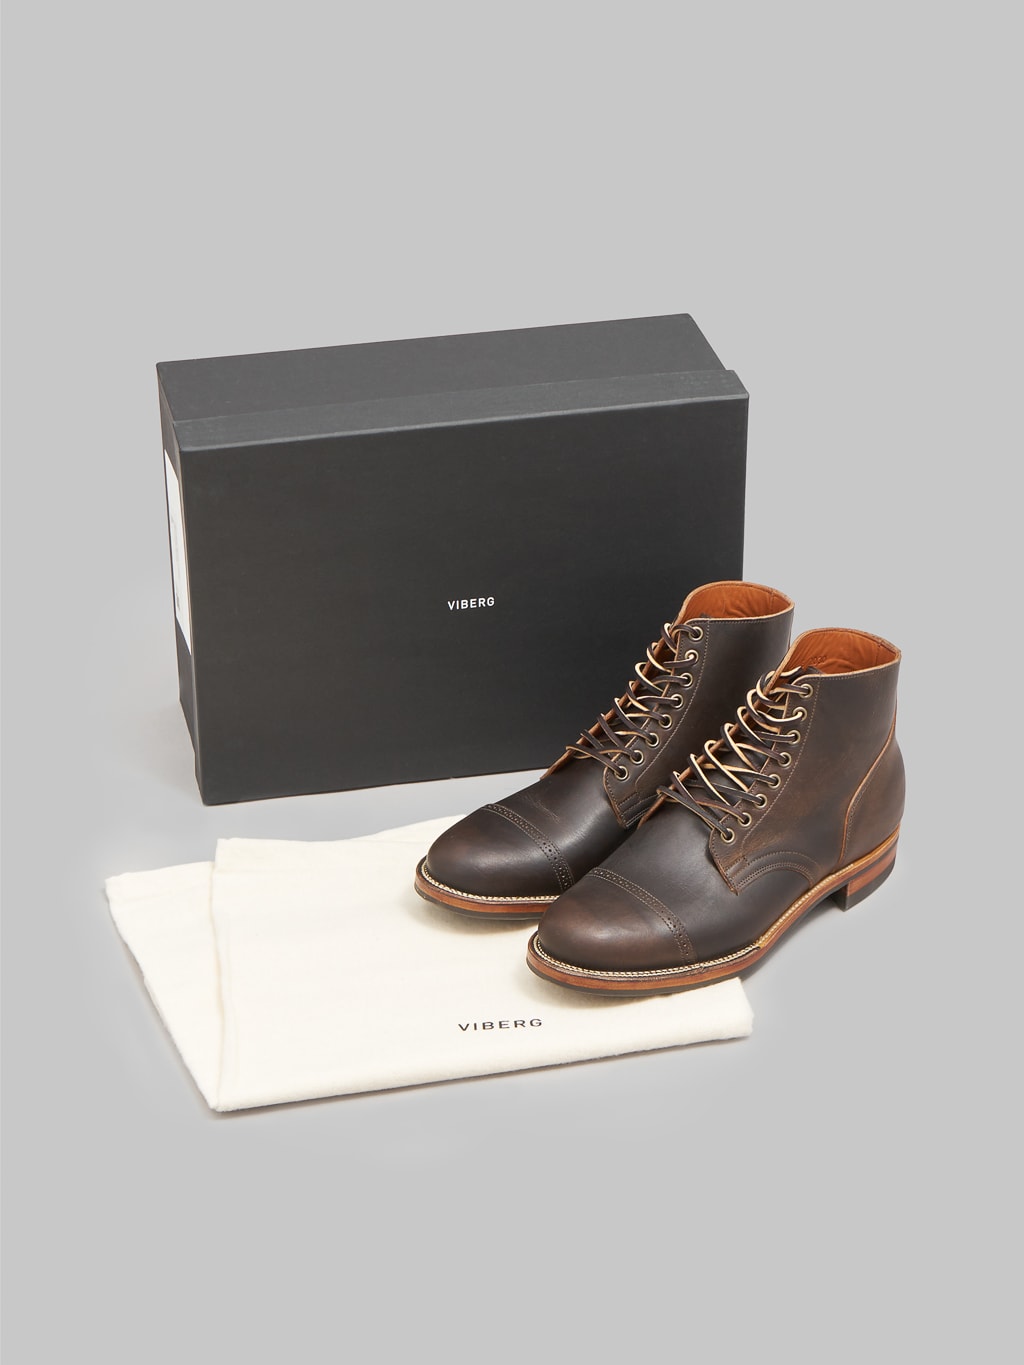 viberg service boot 2023 bct antique phoenix dark brown leather box